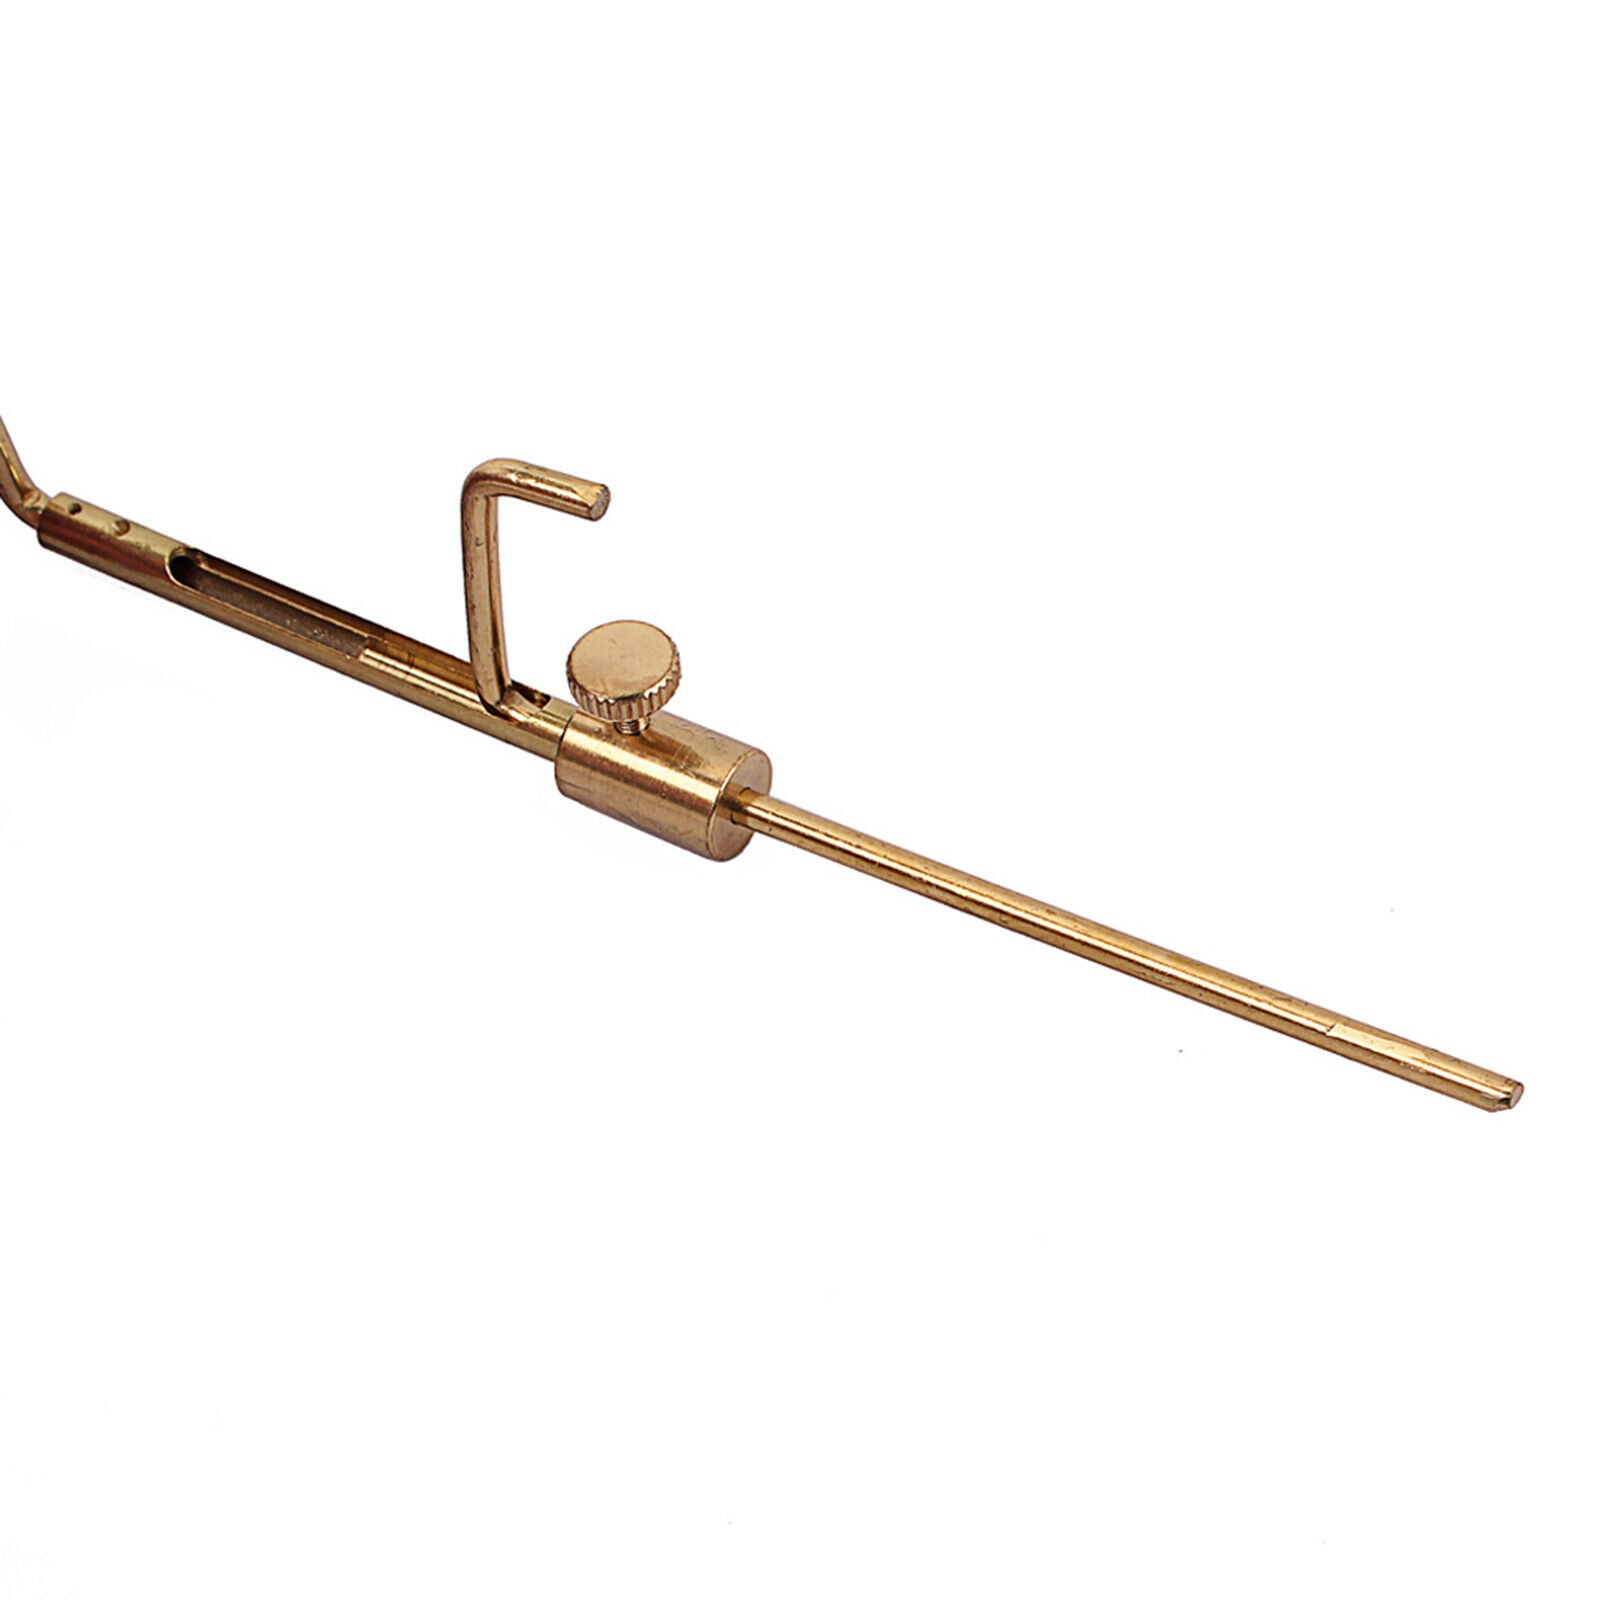 Golden Metal Violins Sound Post Gauge Luthier Install Tools Instrument Accs